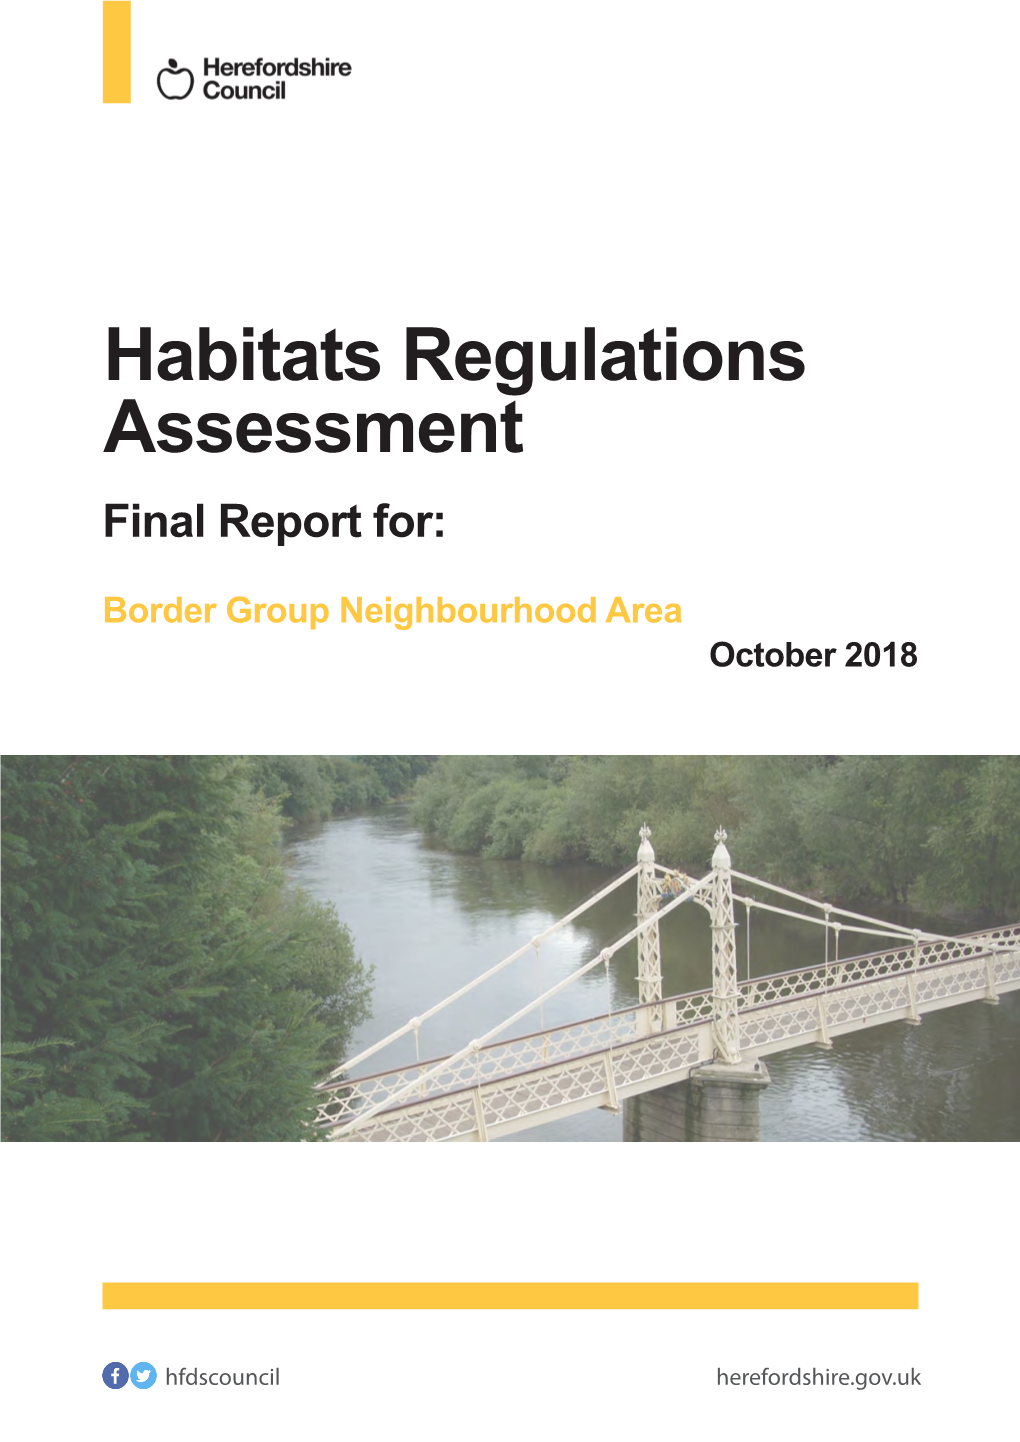 Border Group Habitats Regulations Assessment October 2018